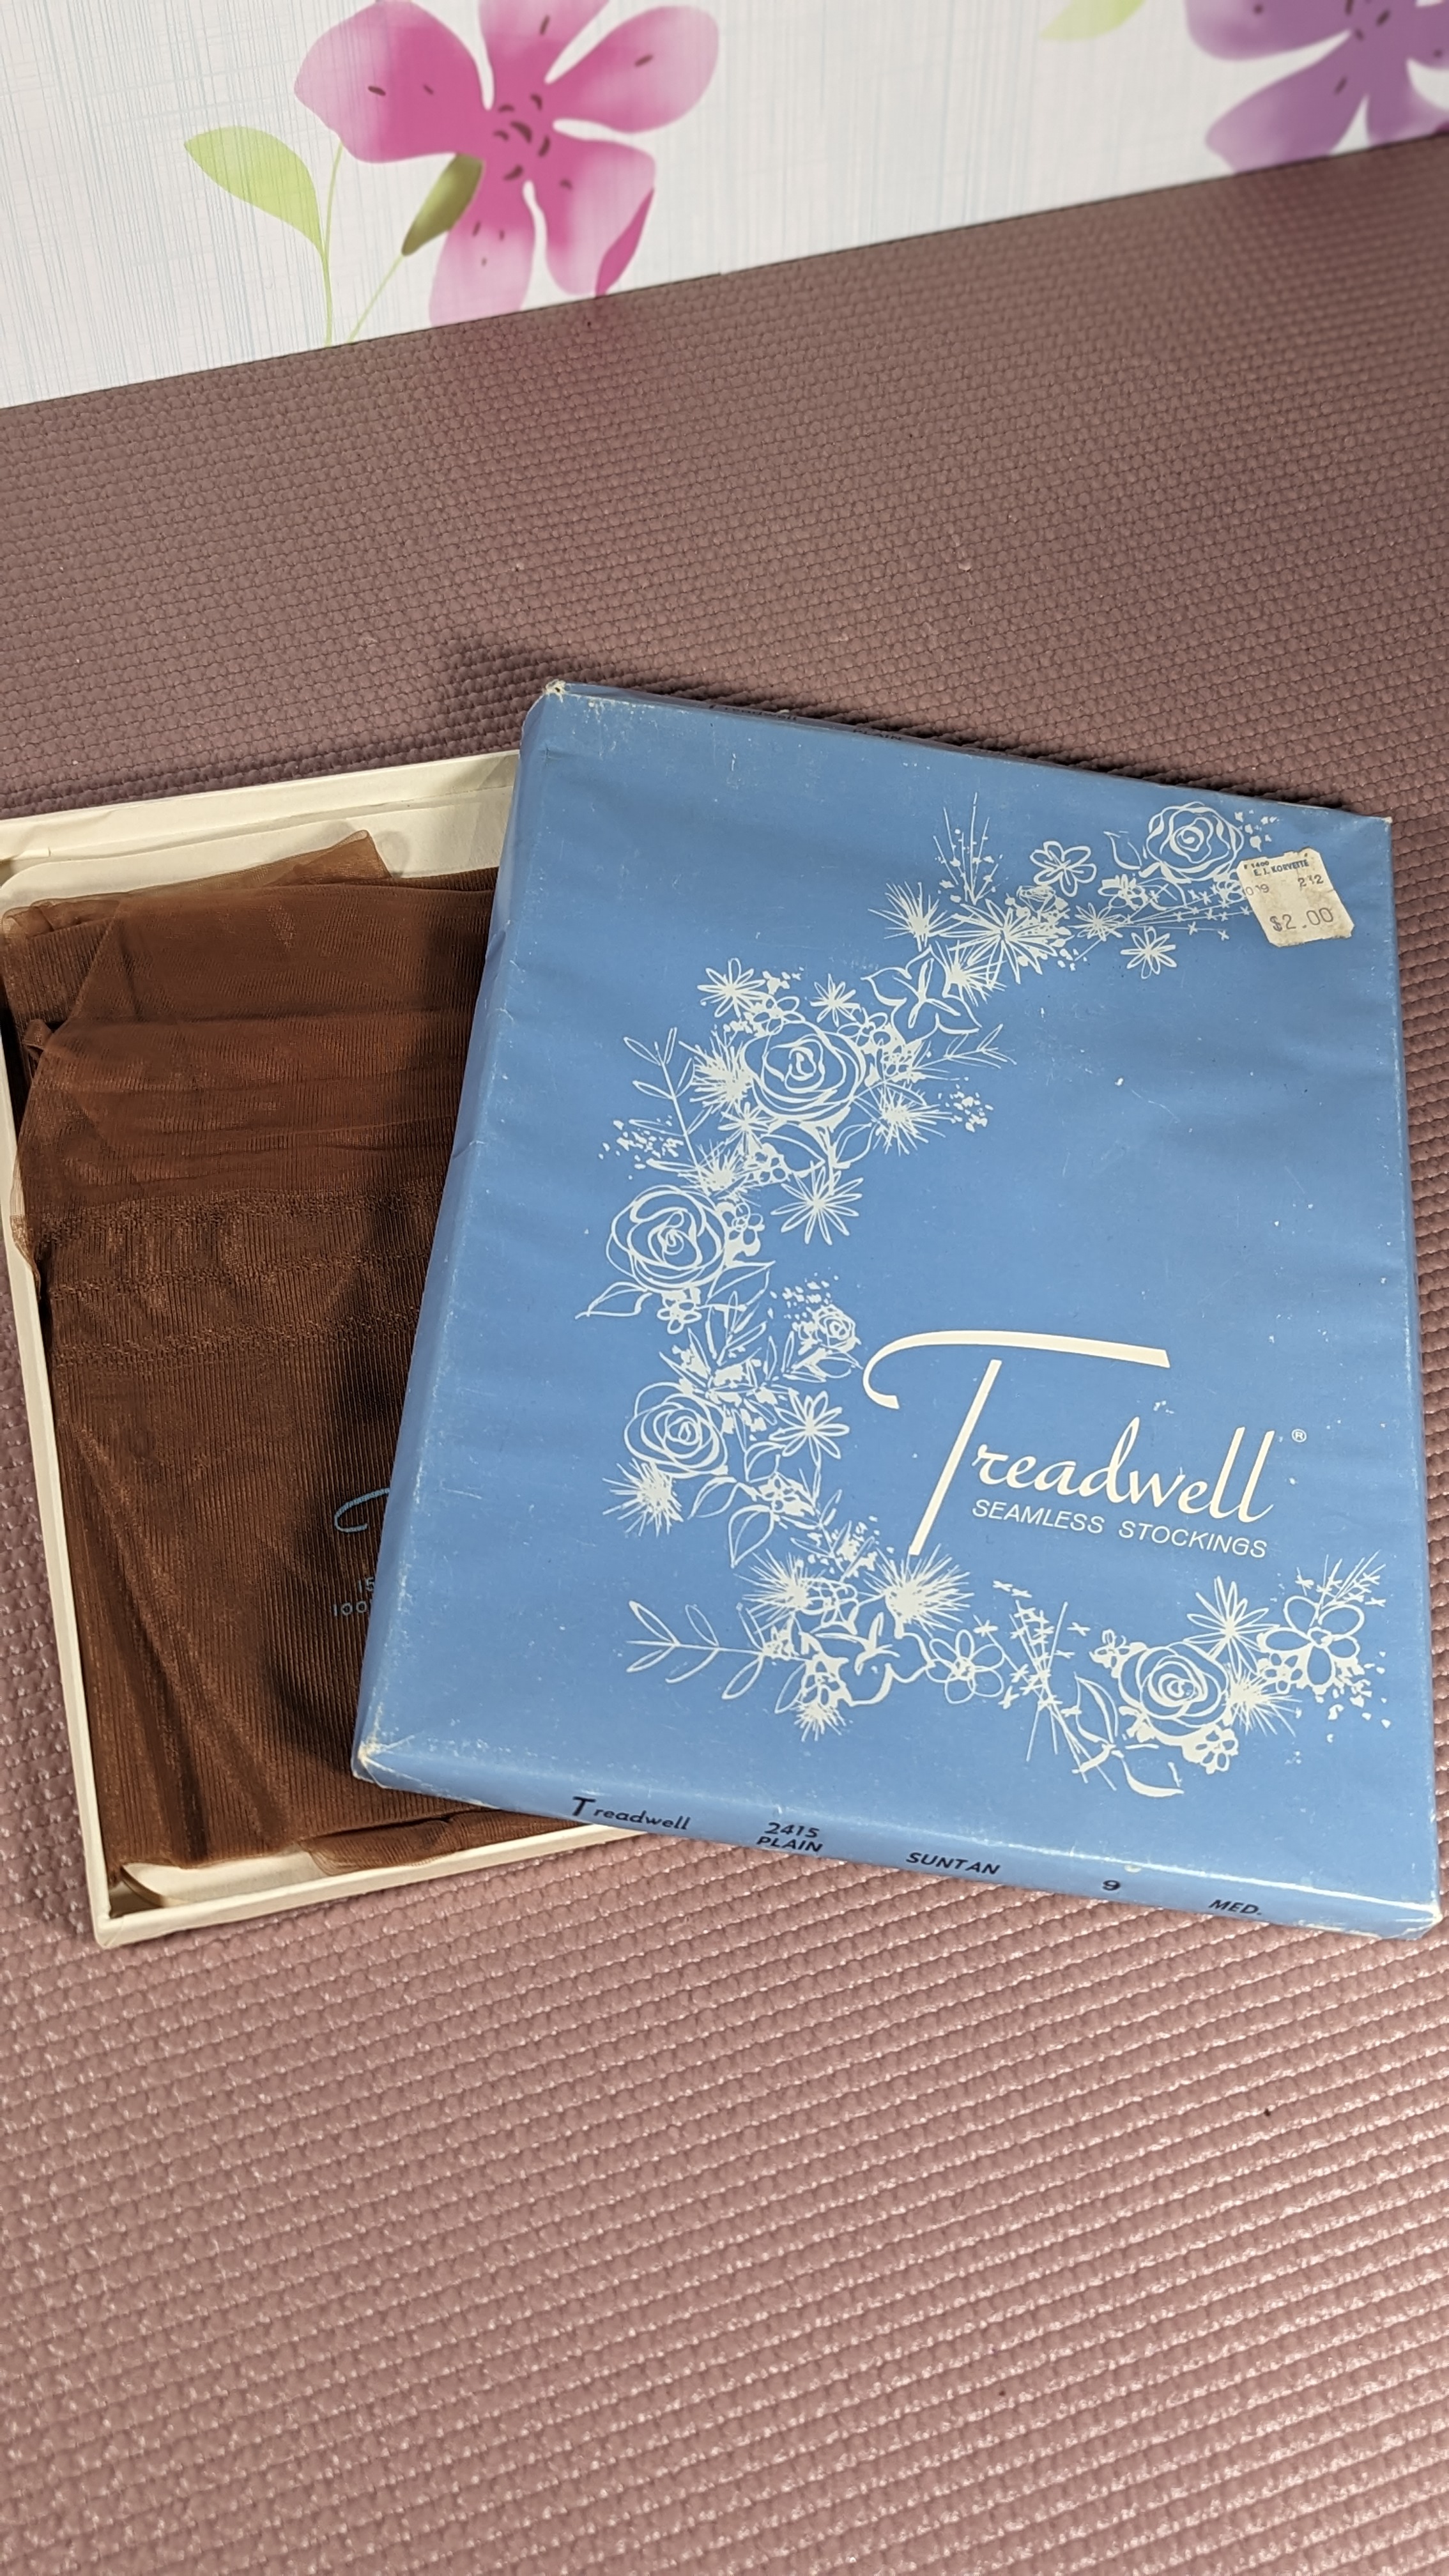 Treadwell Seamless Stockings in original box